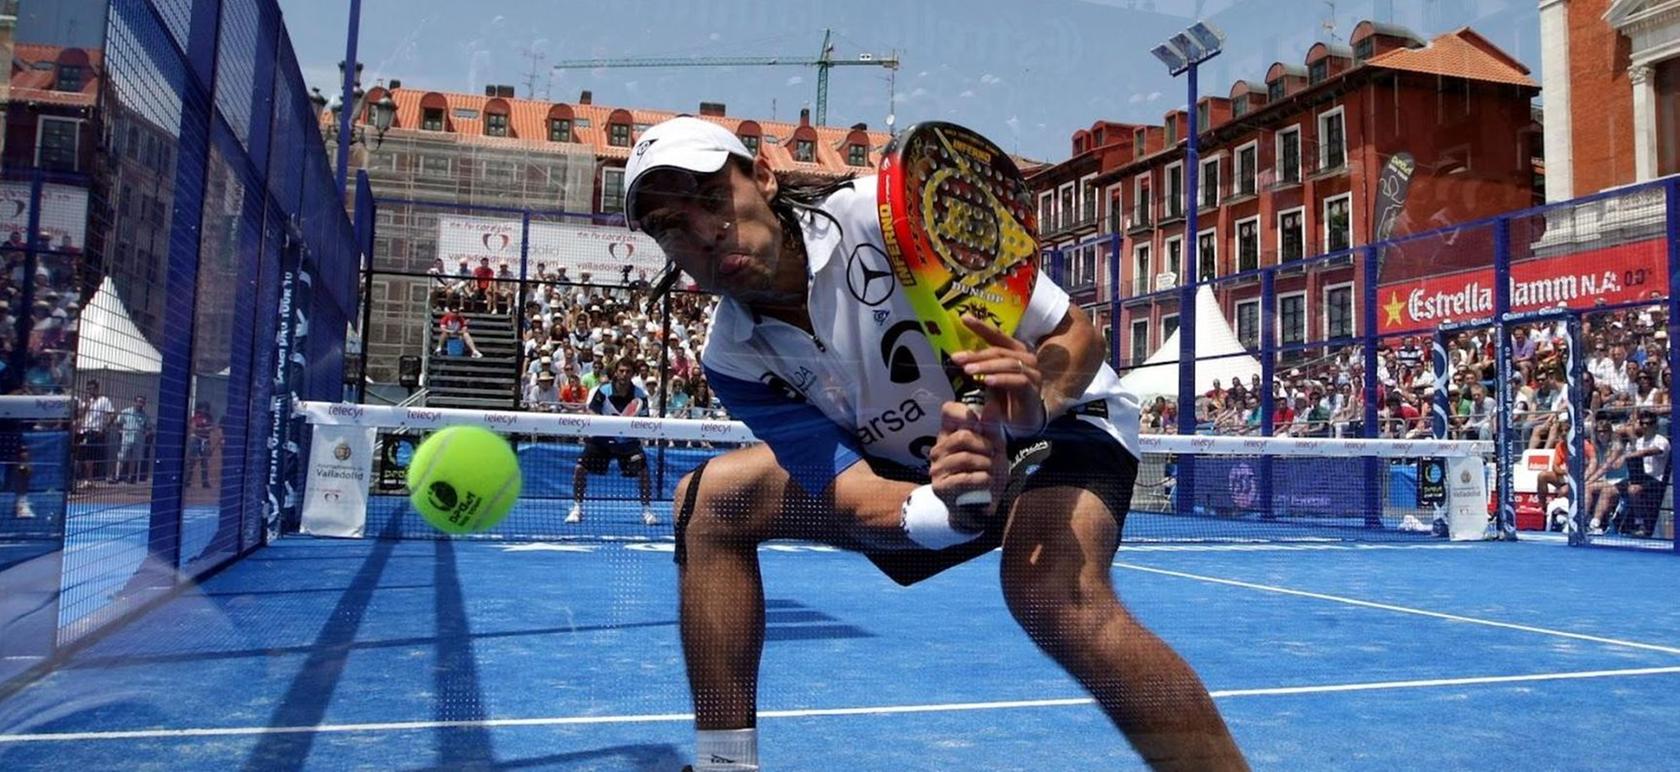 Padel Tennis soll ganz Bayern erobern